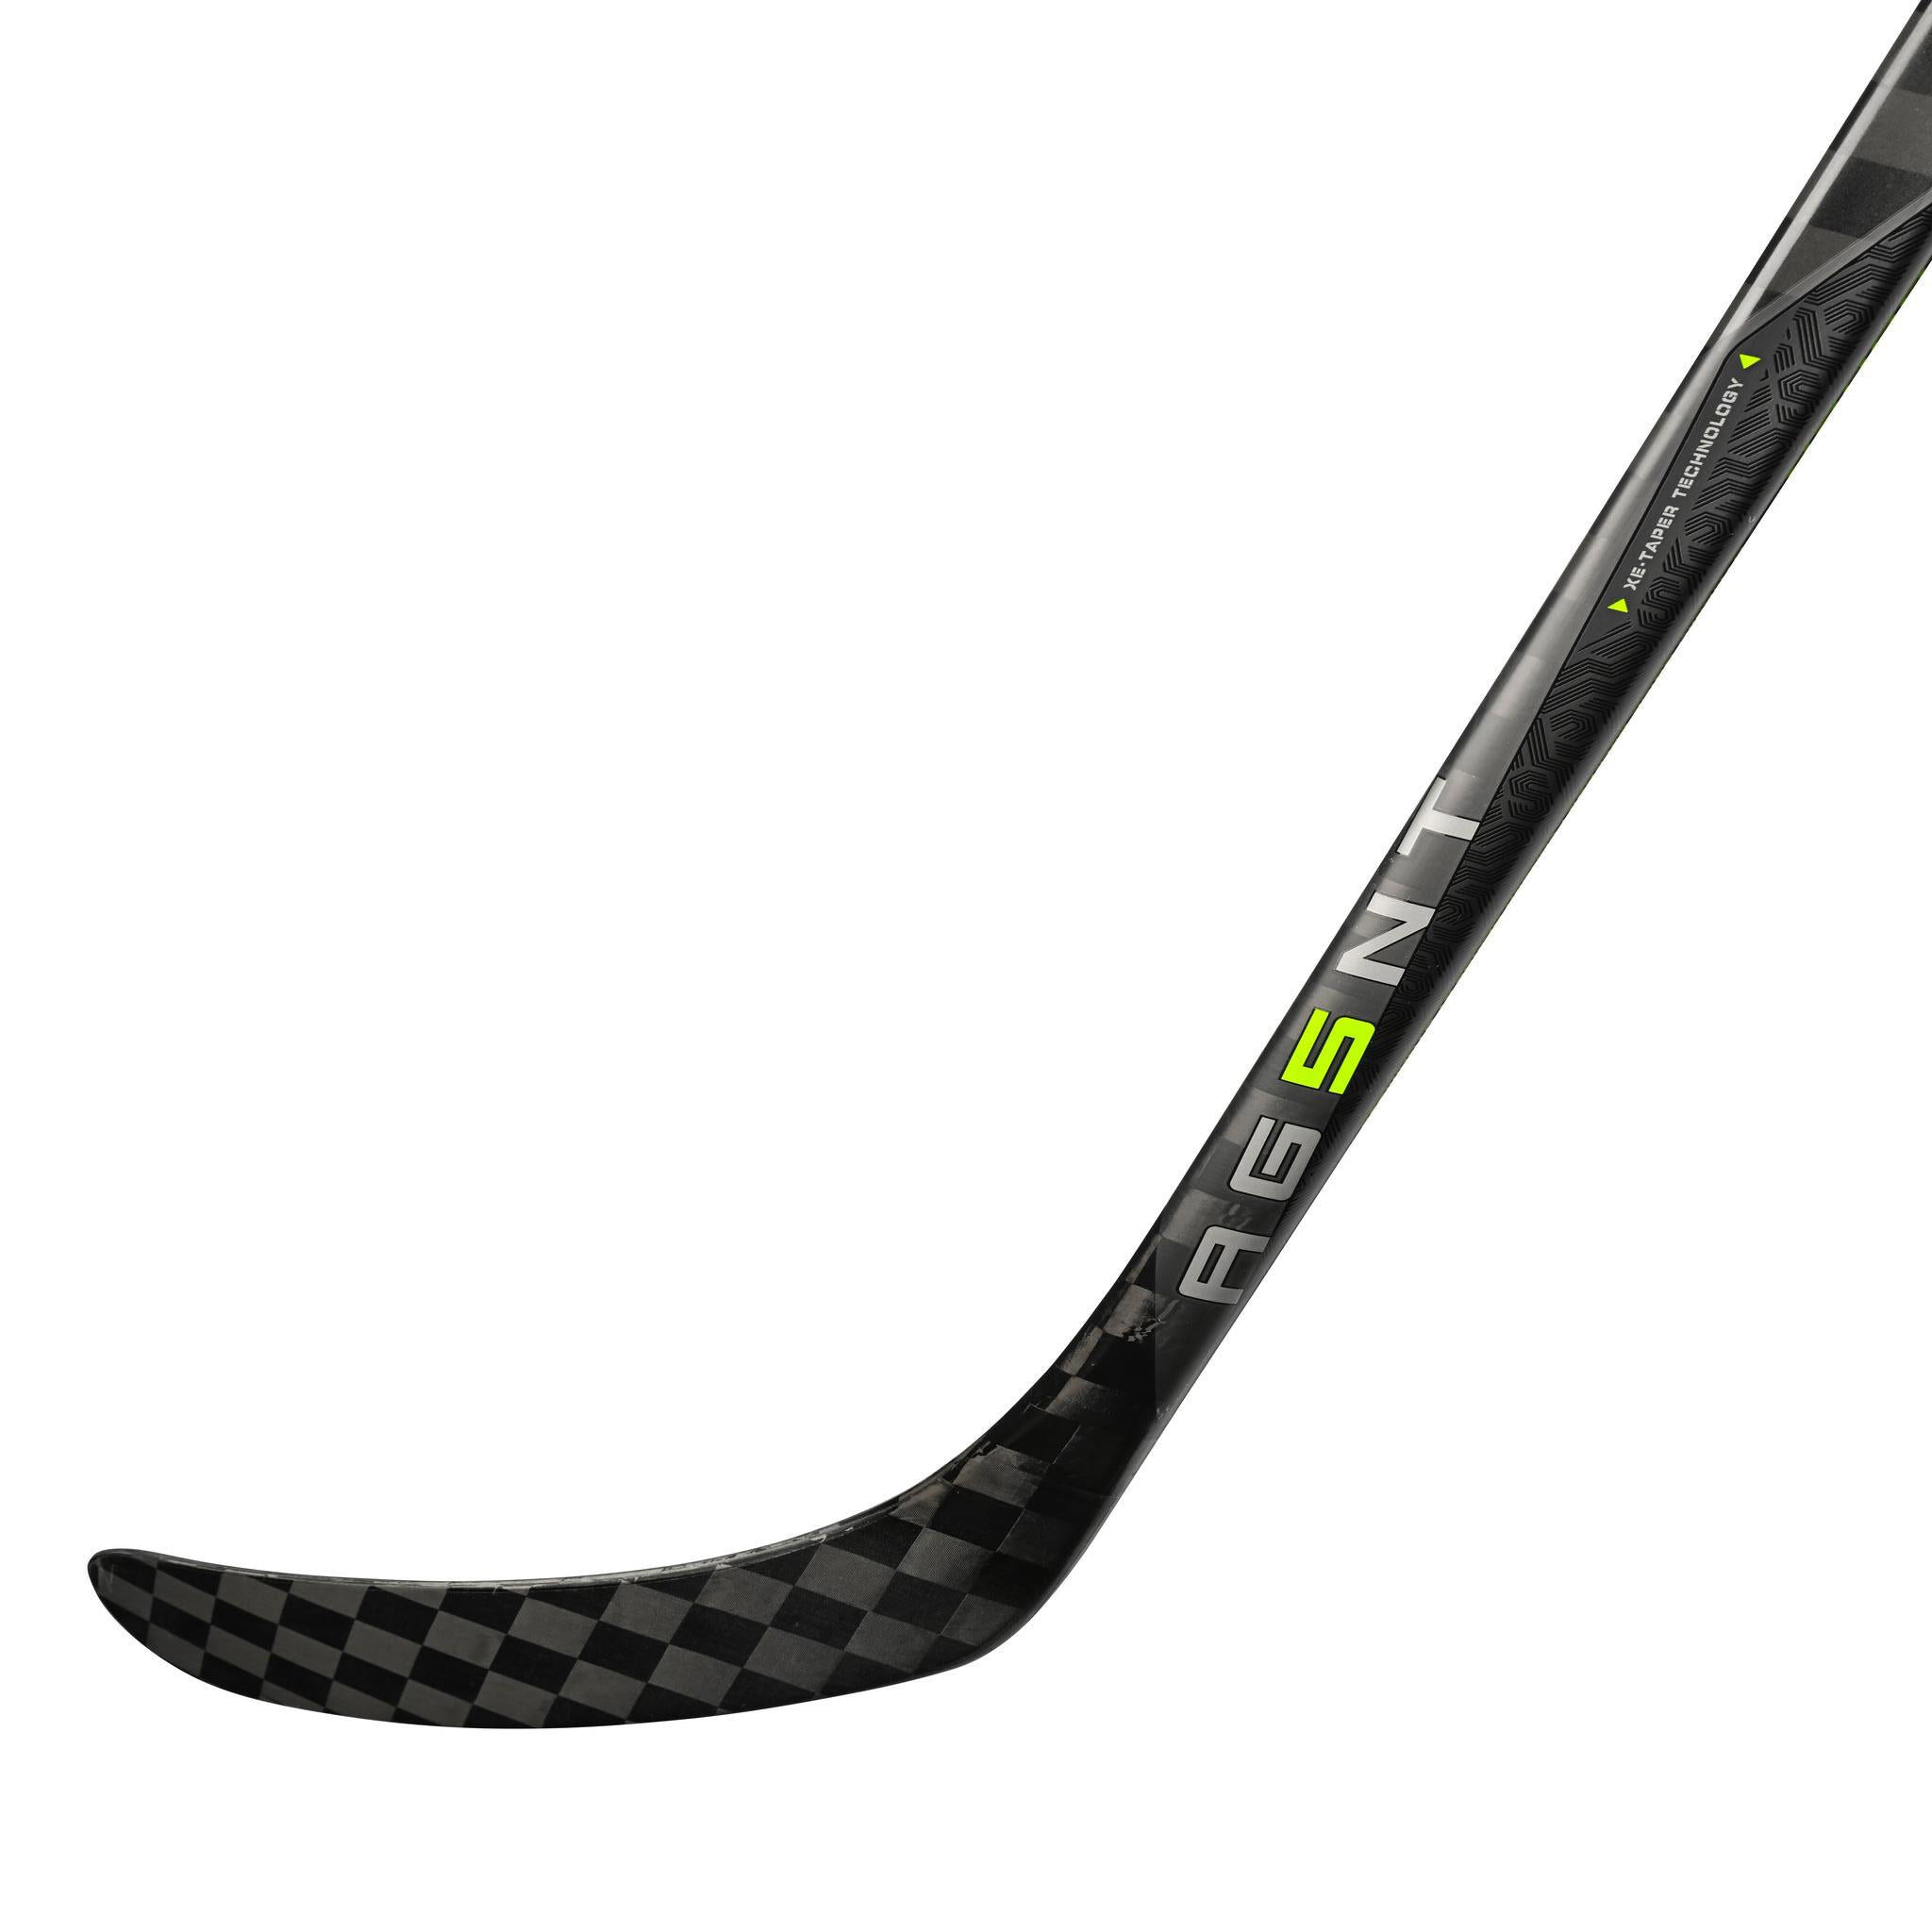 Comment choisir le bon bâton de hockey